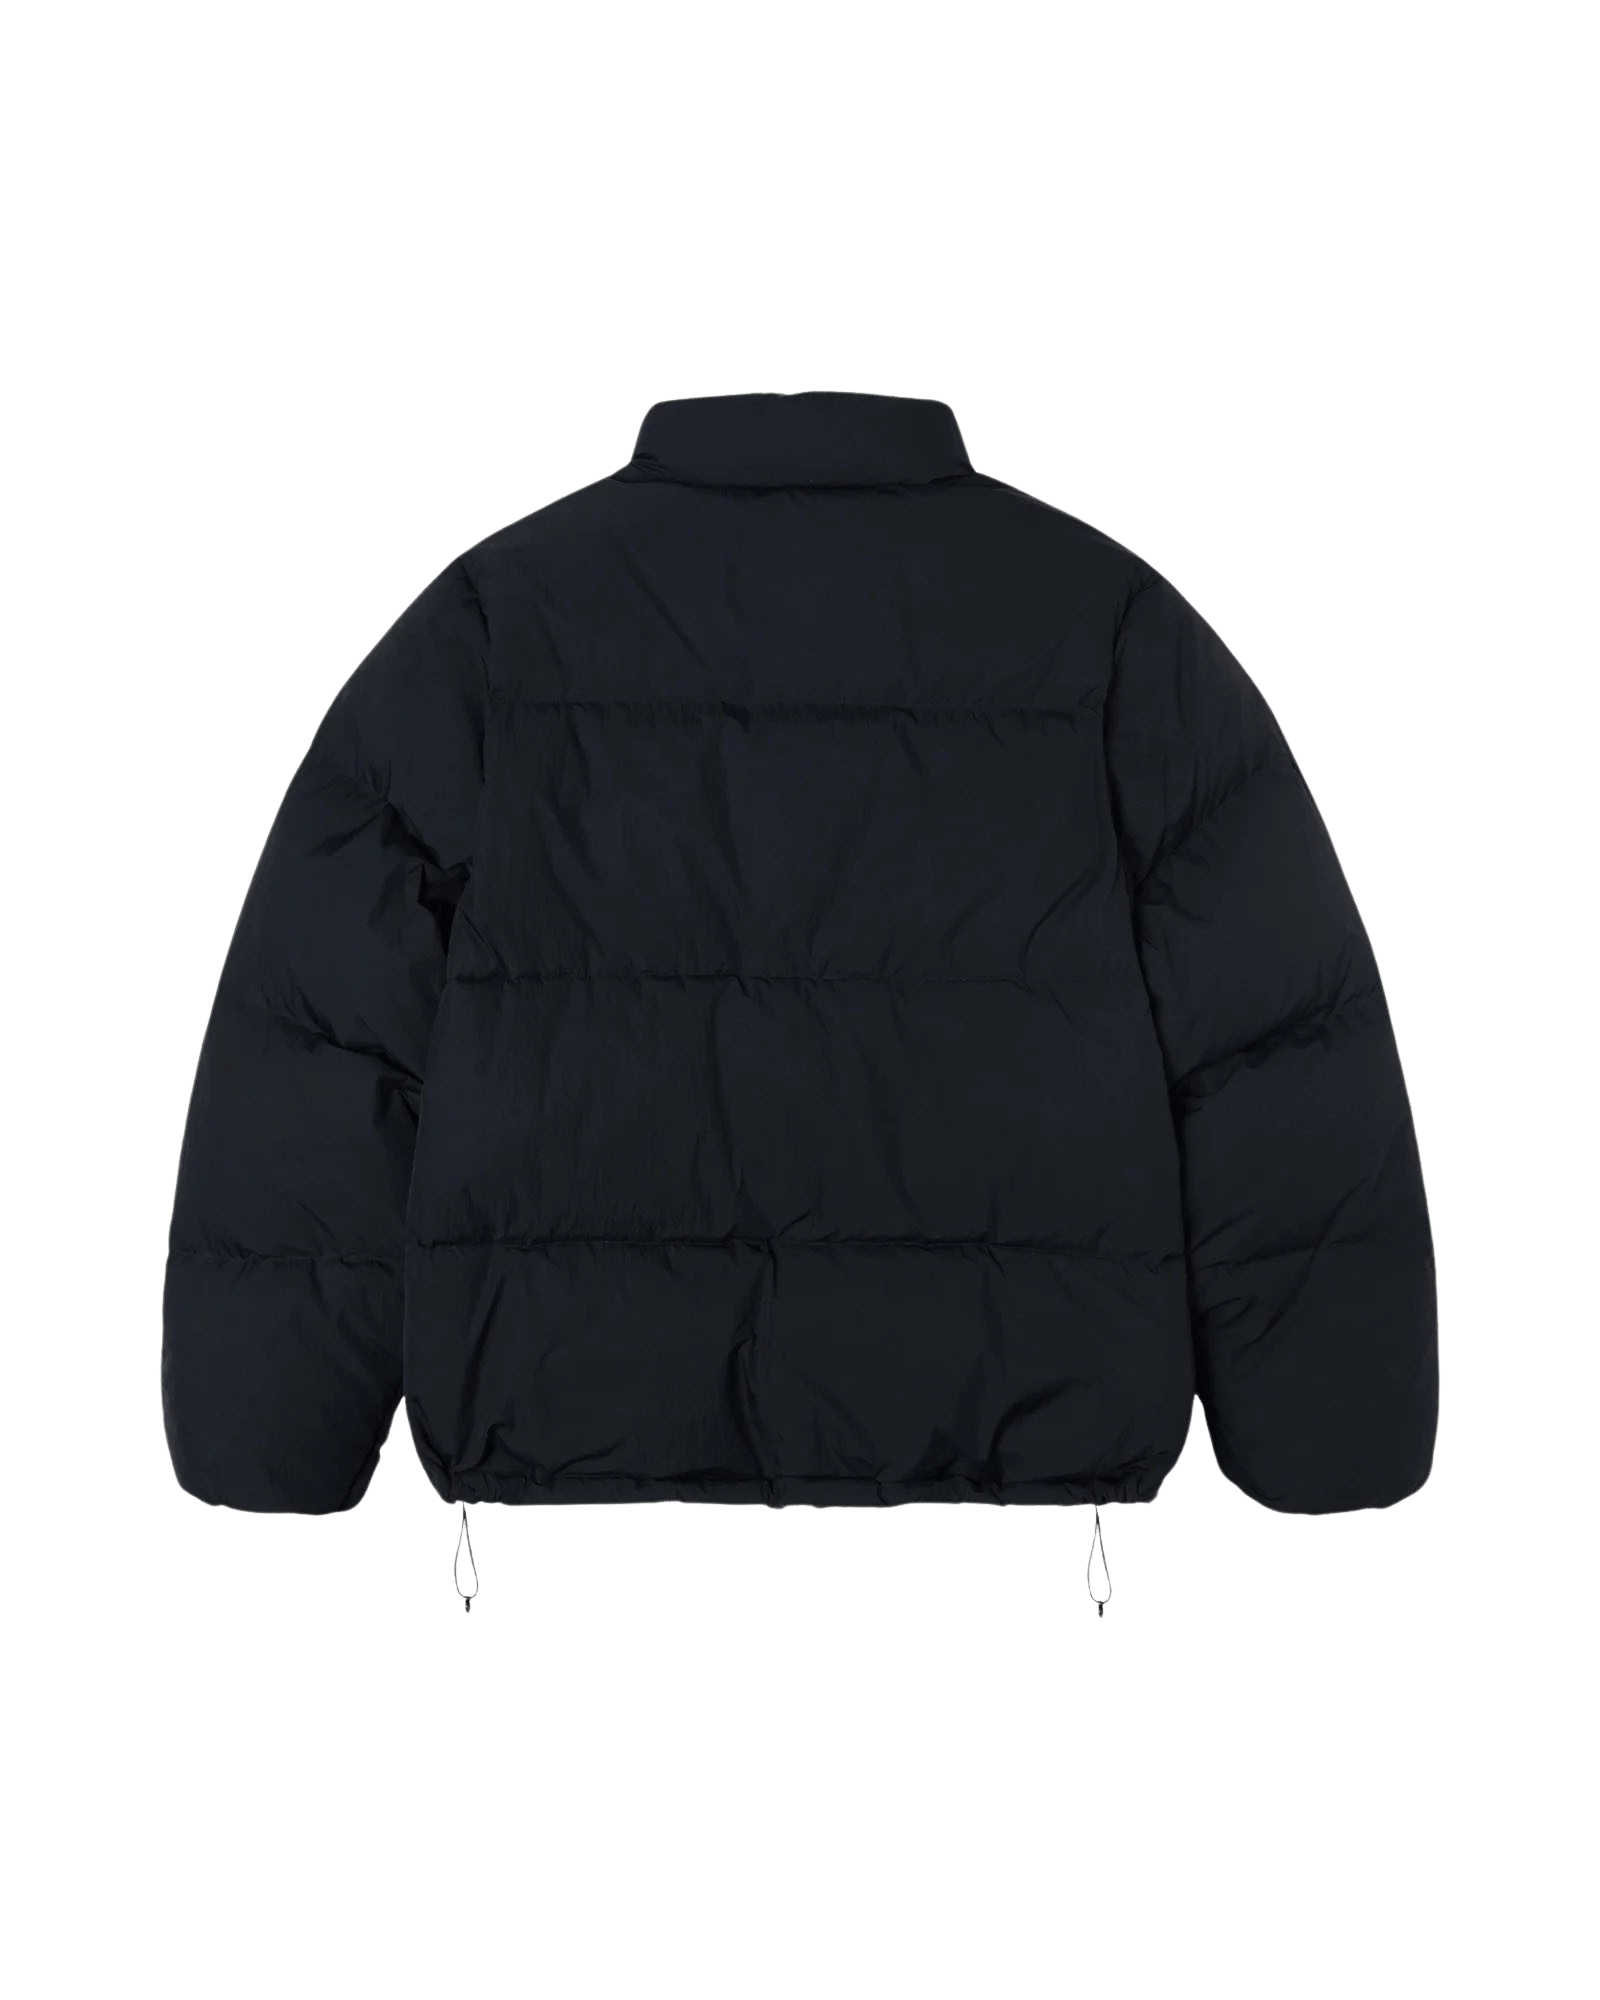 Nylon Down Puffer $344 Stüssy Outerwear Down Jackets Black